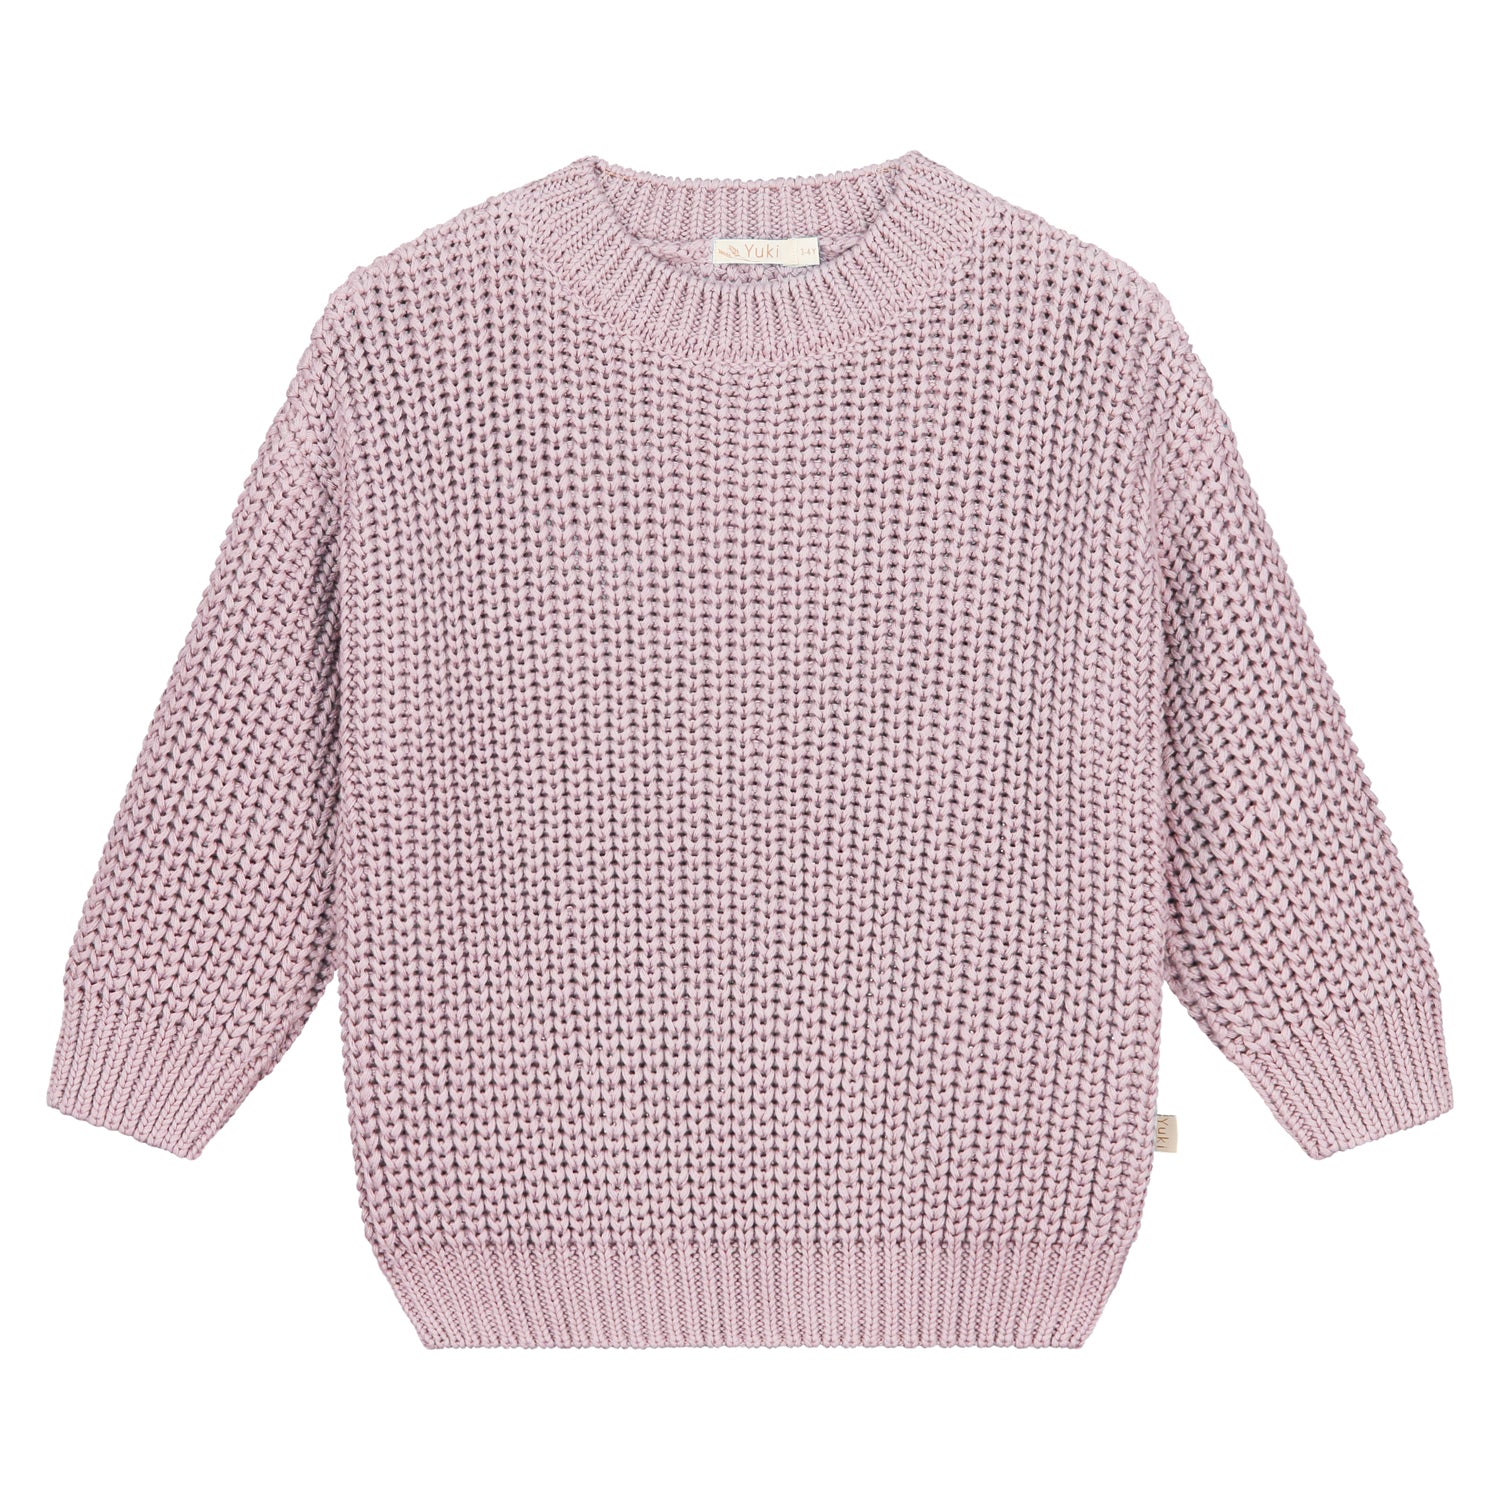 Organic knit sweater - Blossom